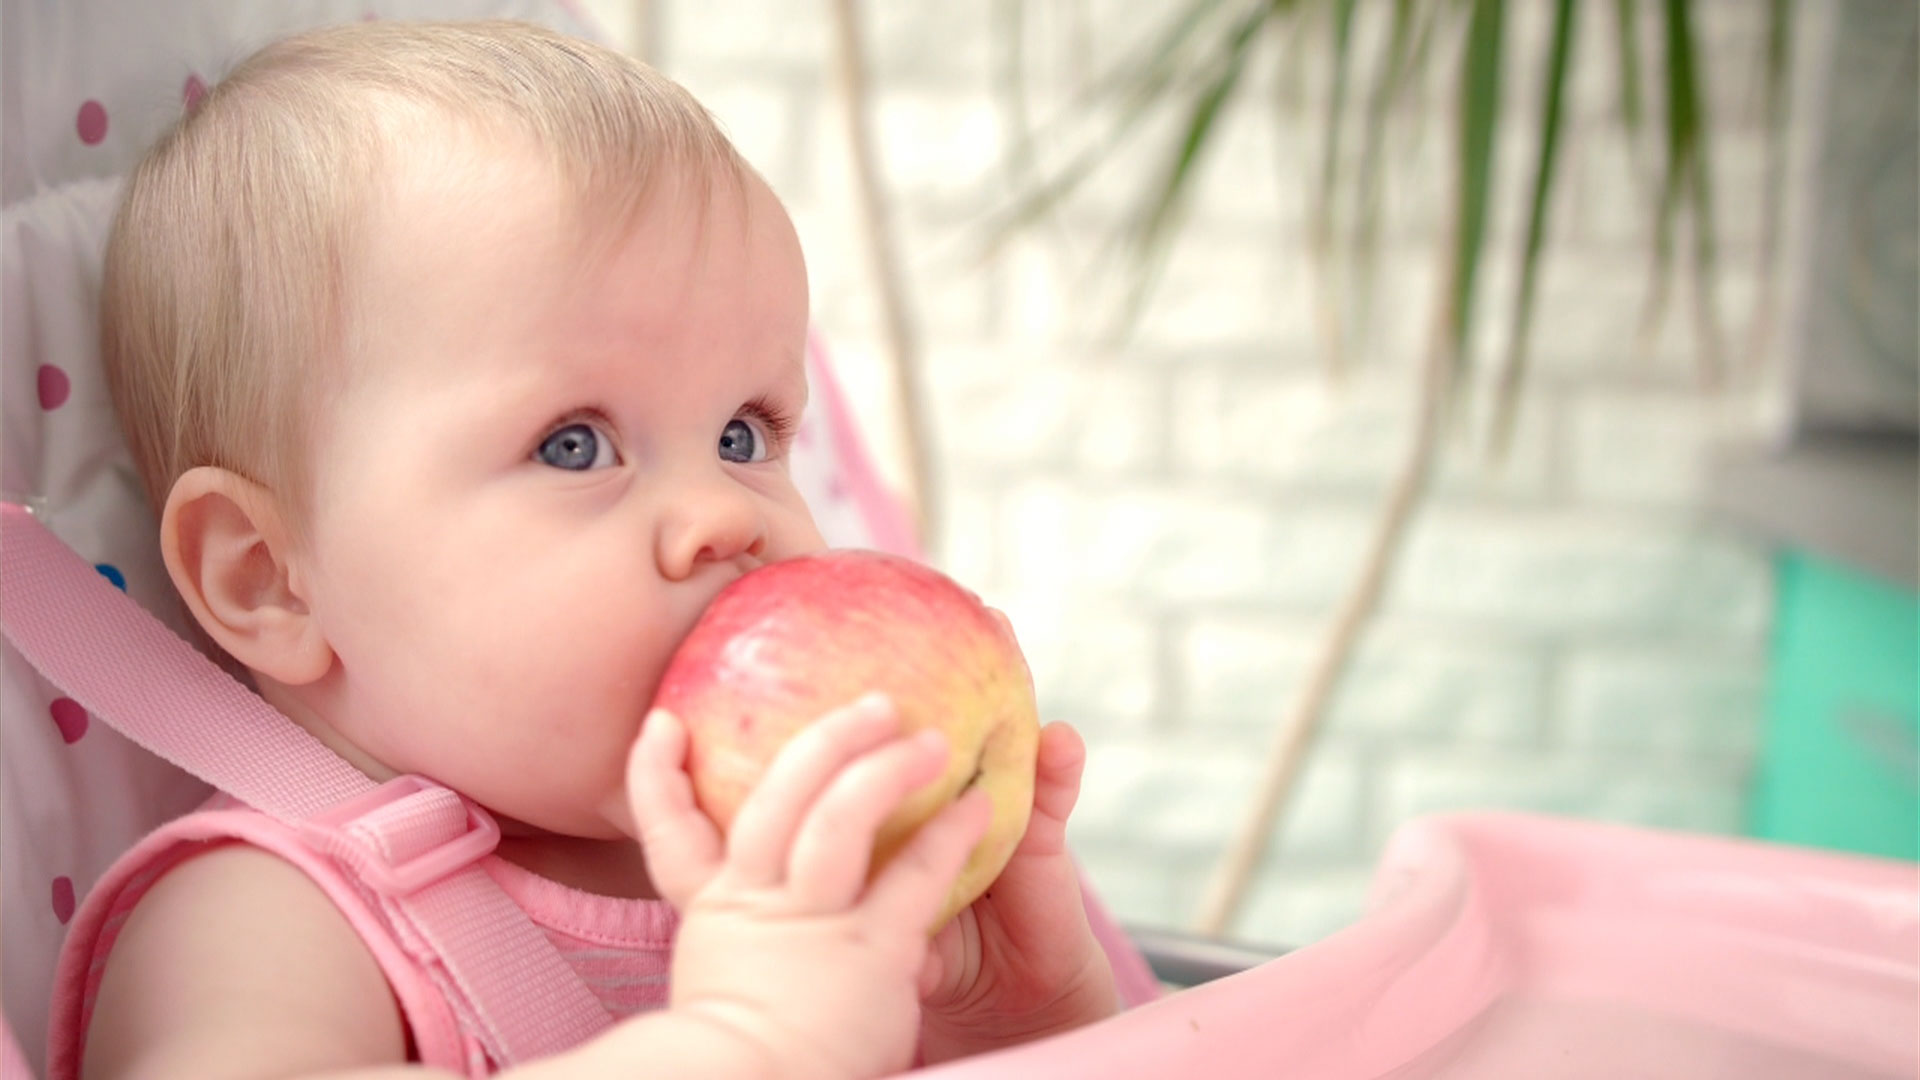 Baby eating apple